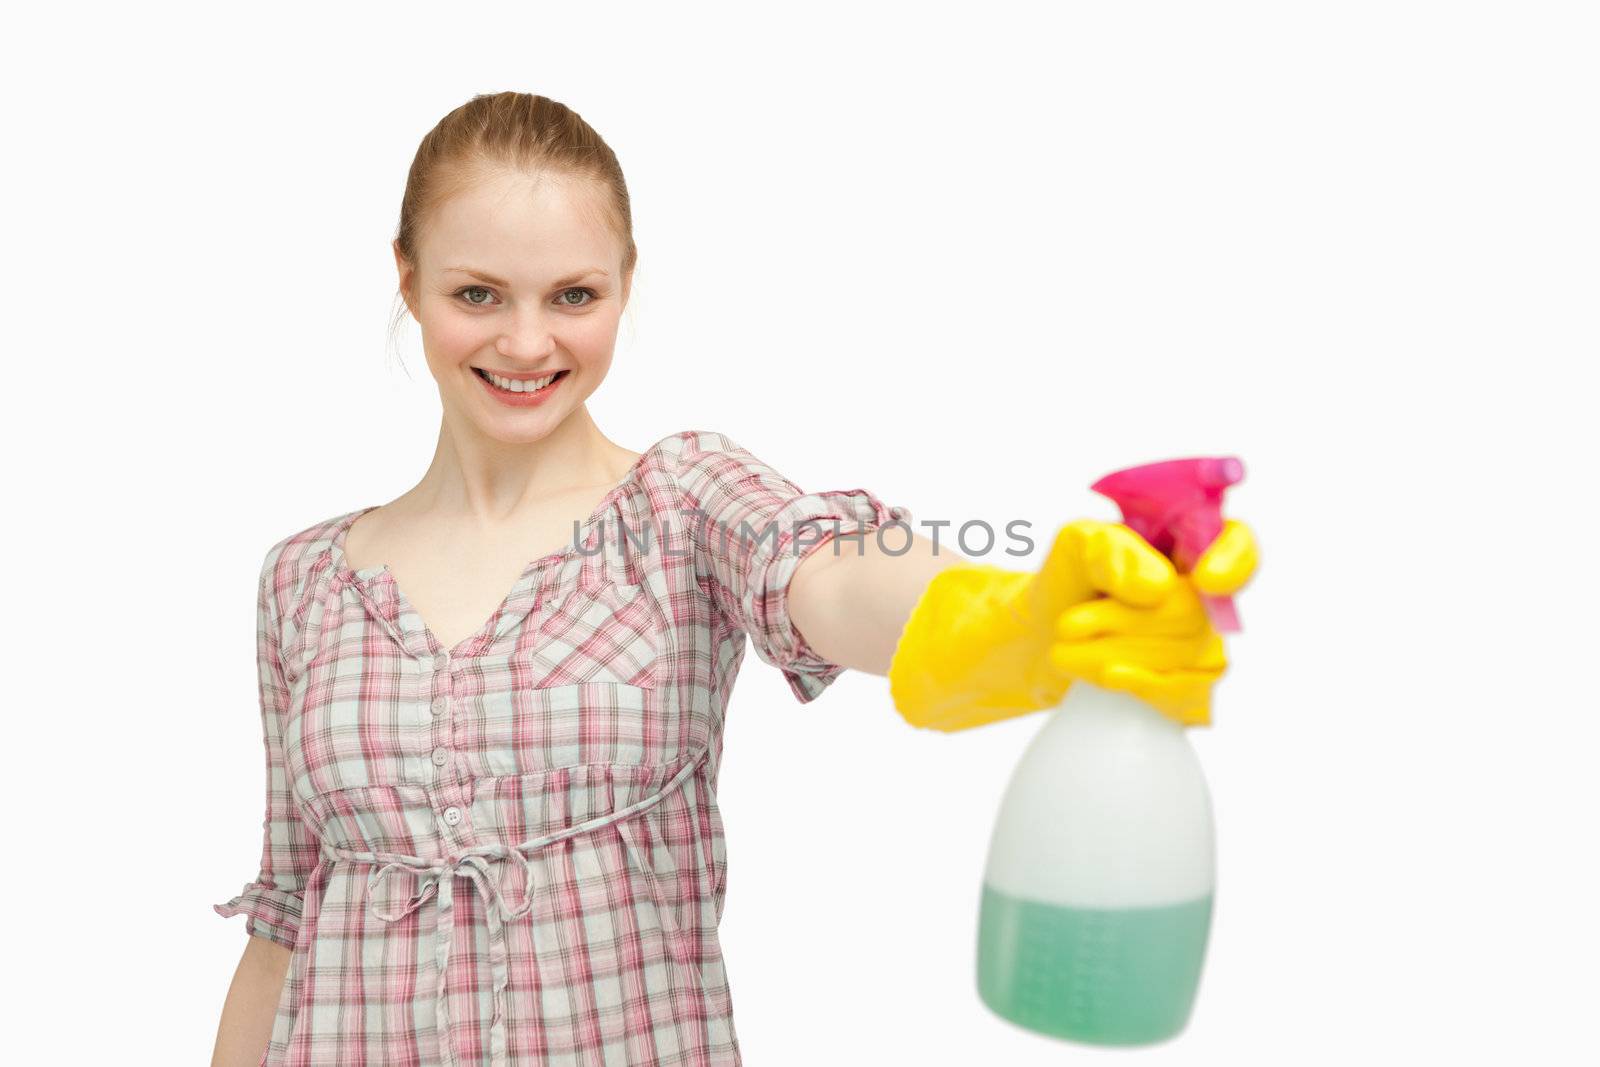 Joyful woman holding a spray bottle while smiling against white background